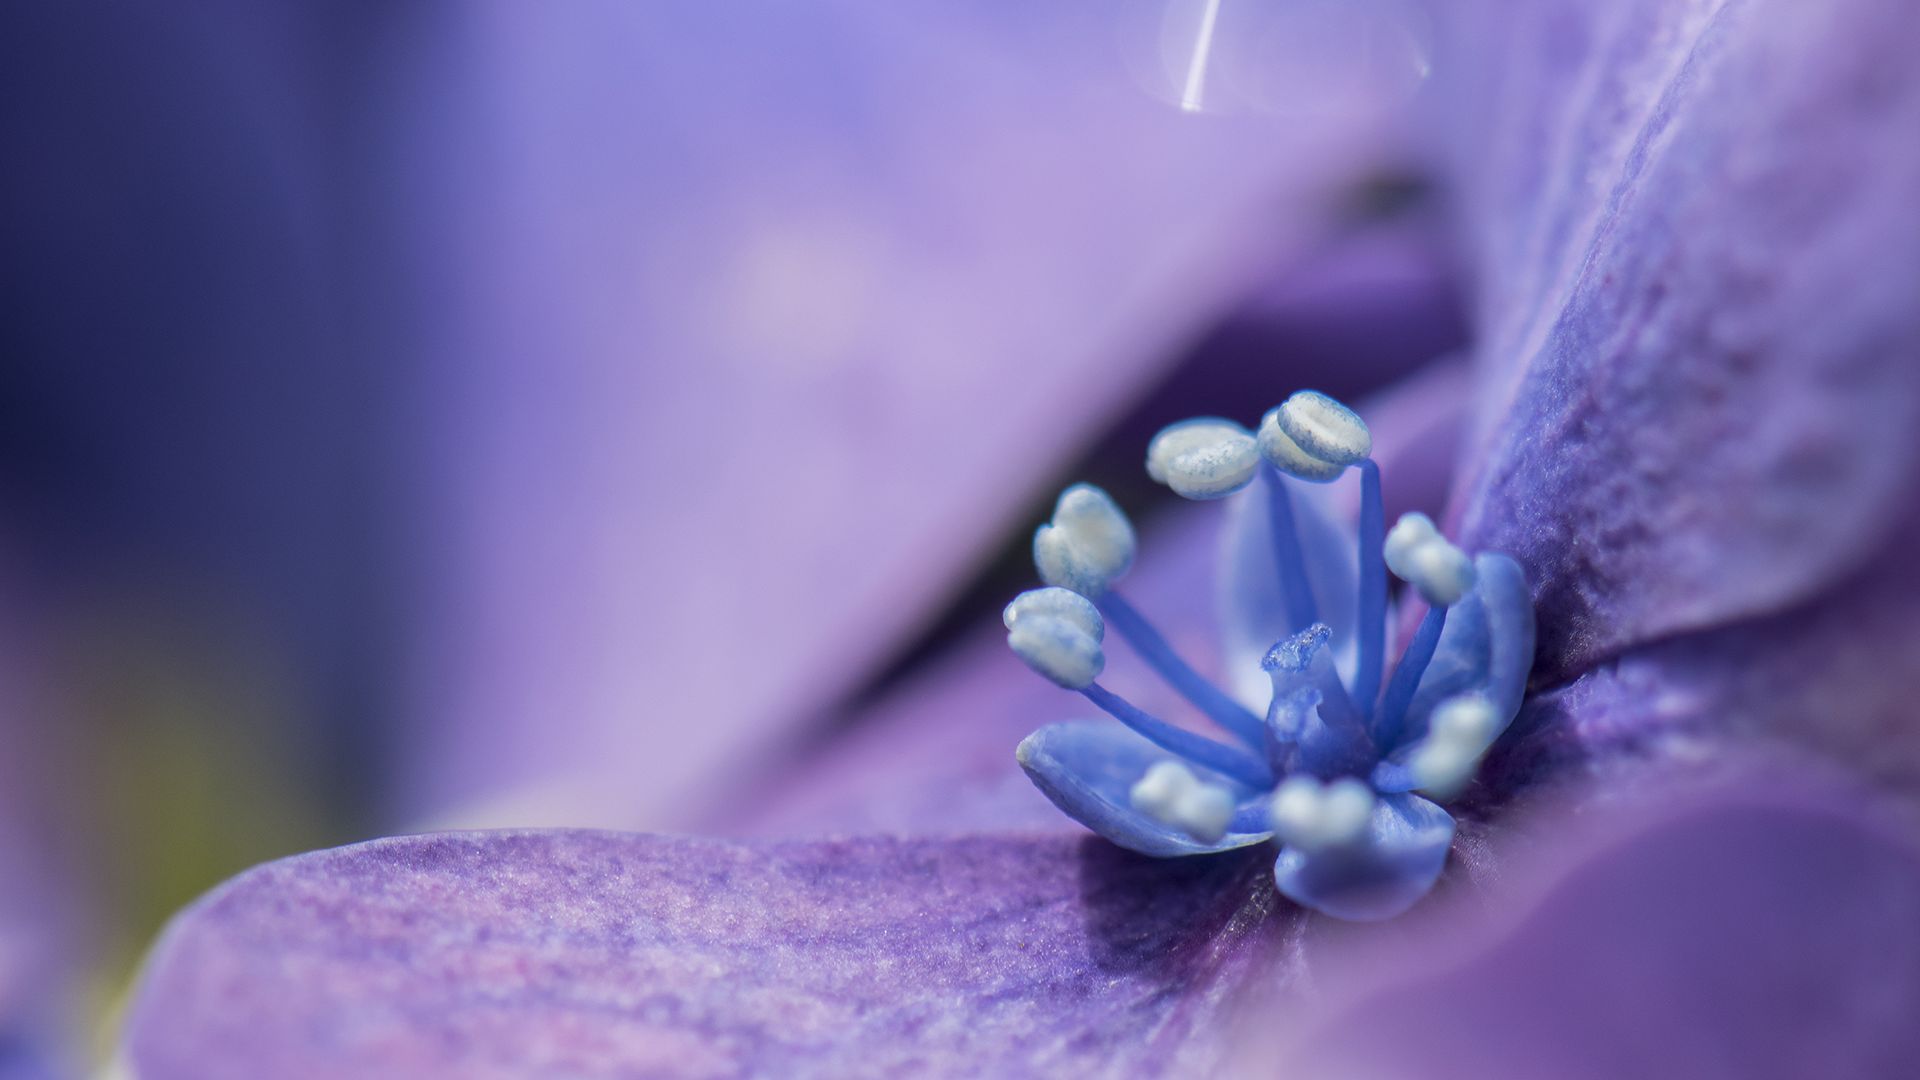 Wallpaper Purple flower, close up